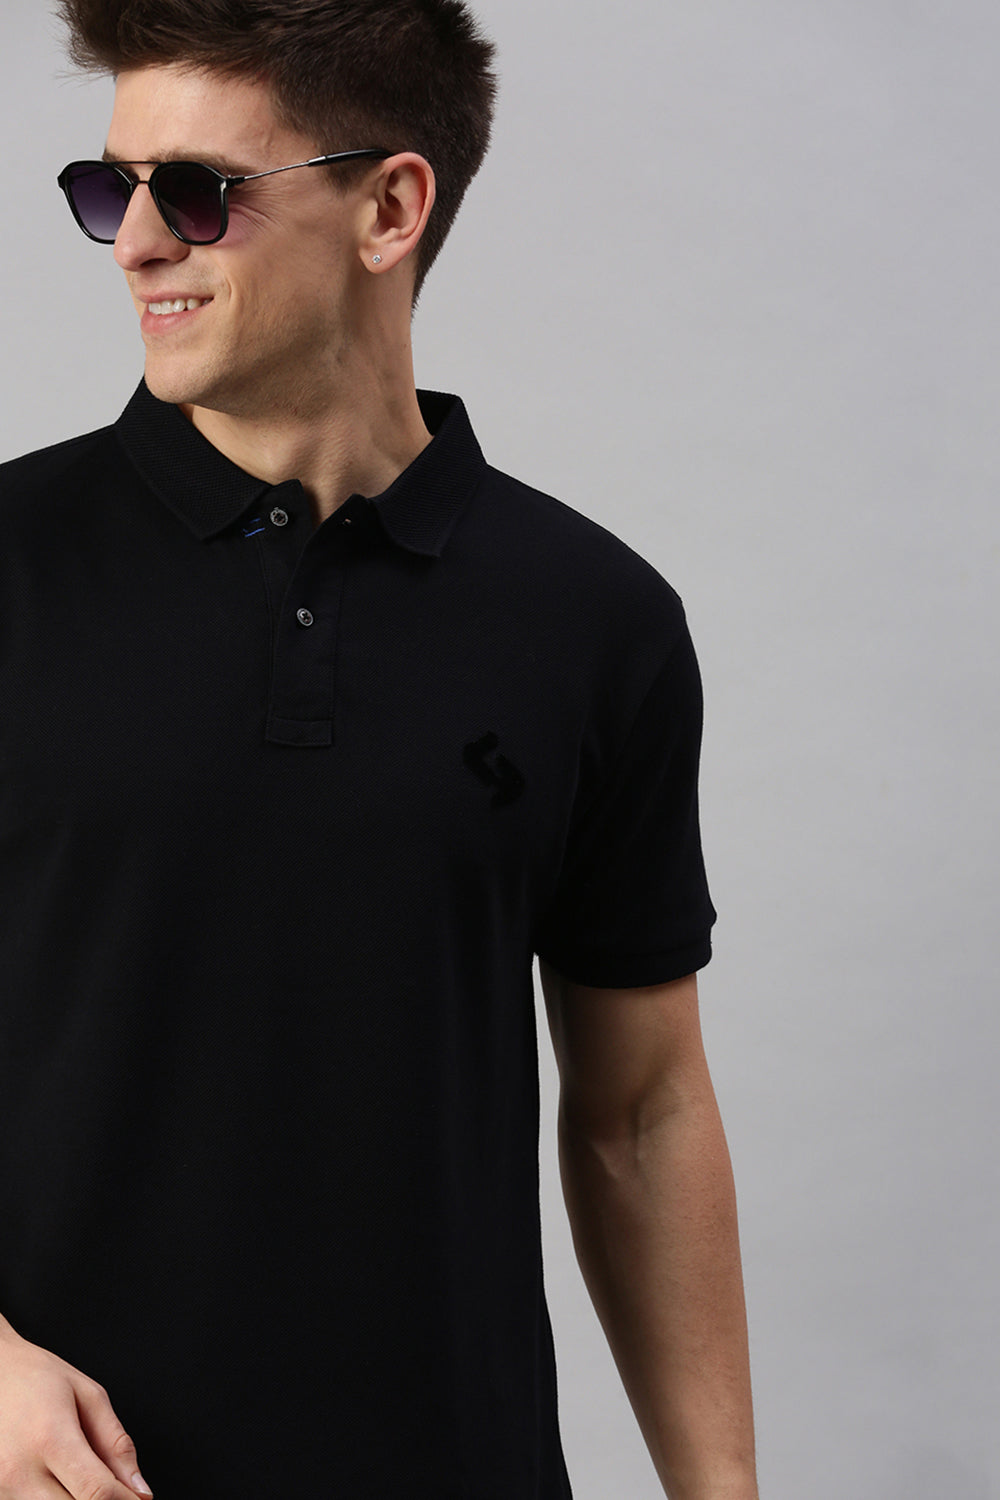 Classic Polo Men's Cotton Half Sleeve Solid Slim Fit Polo Neck Black Color T-Shirt | Prm - 750 A